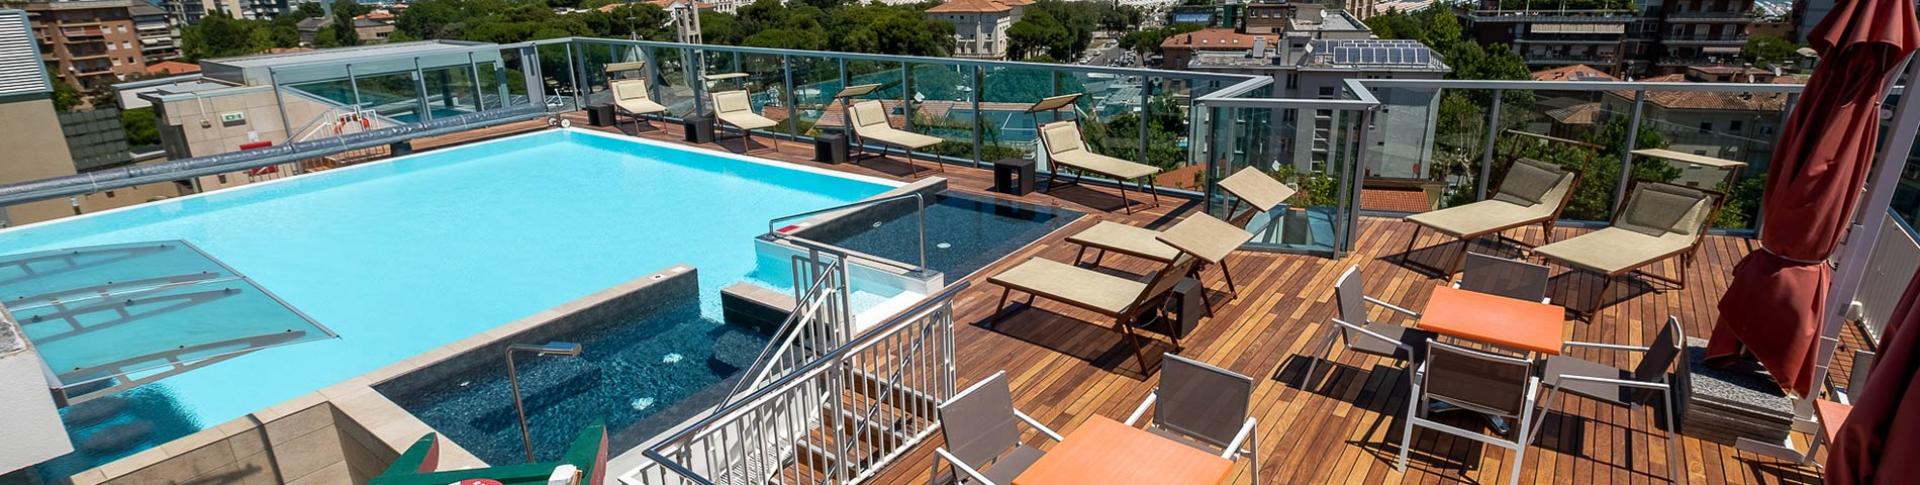 ariahotel fr hotel-avec-piscine 013